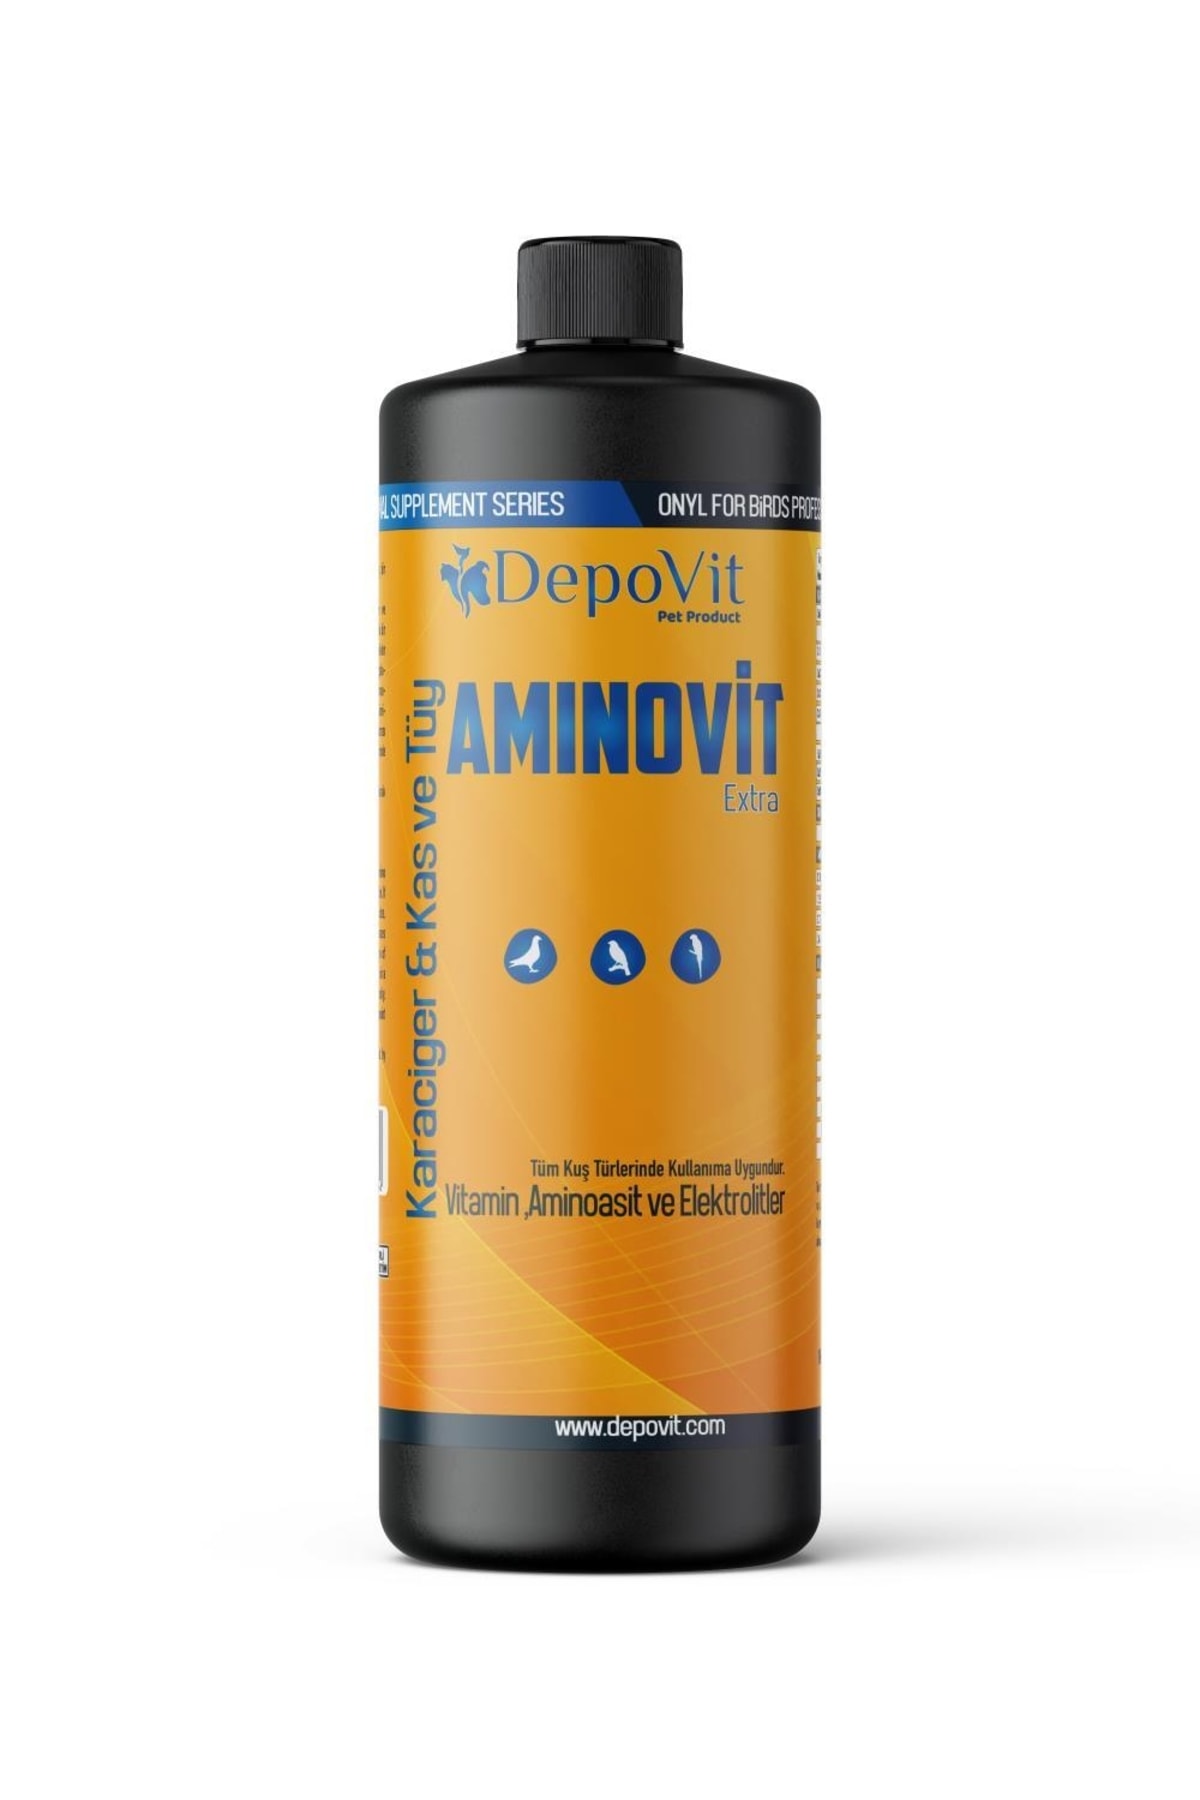 DEPOVİT Aminovit A.asit, Vitamin Ve Mineral Takviyesi 1lt